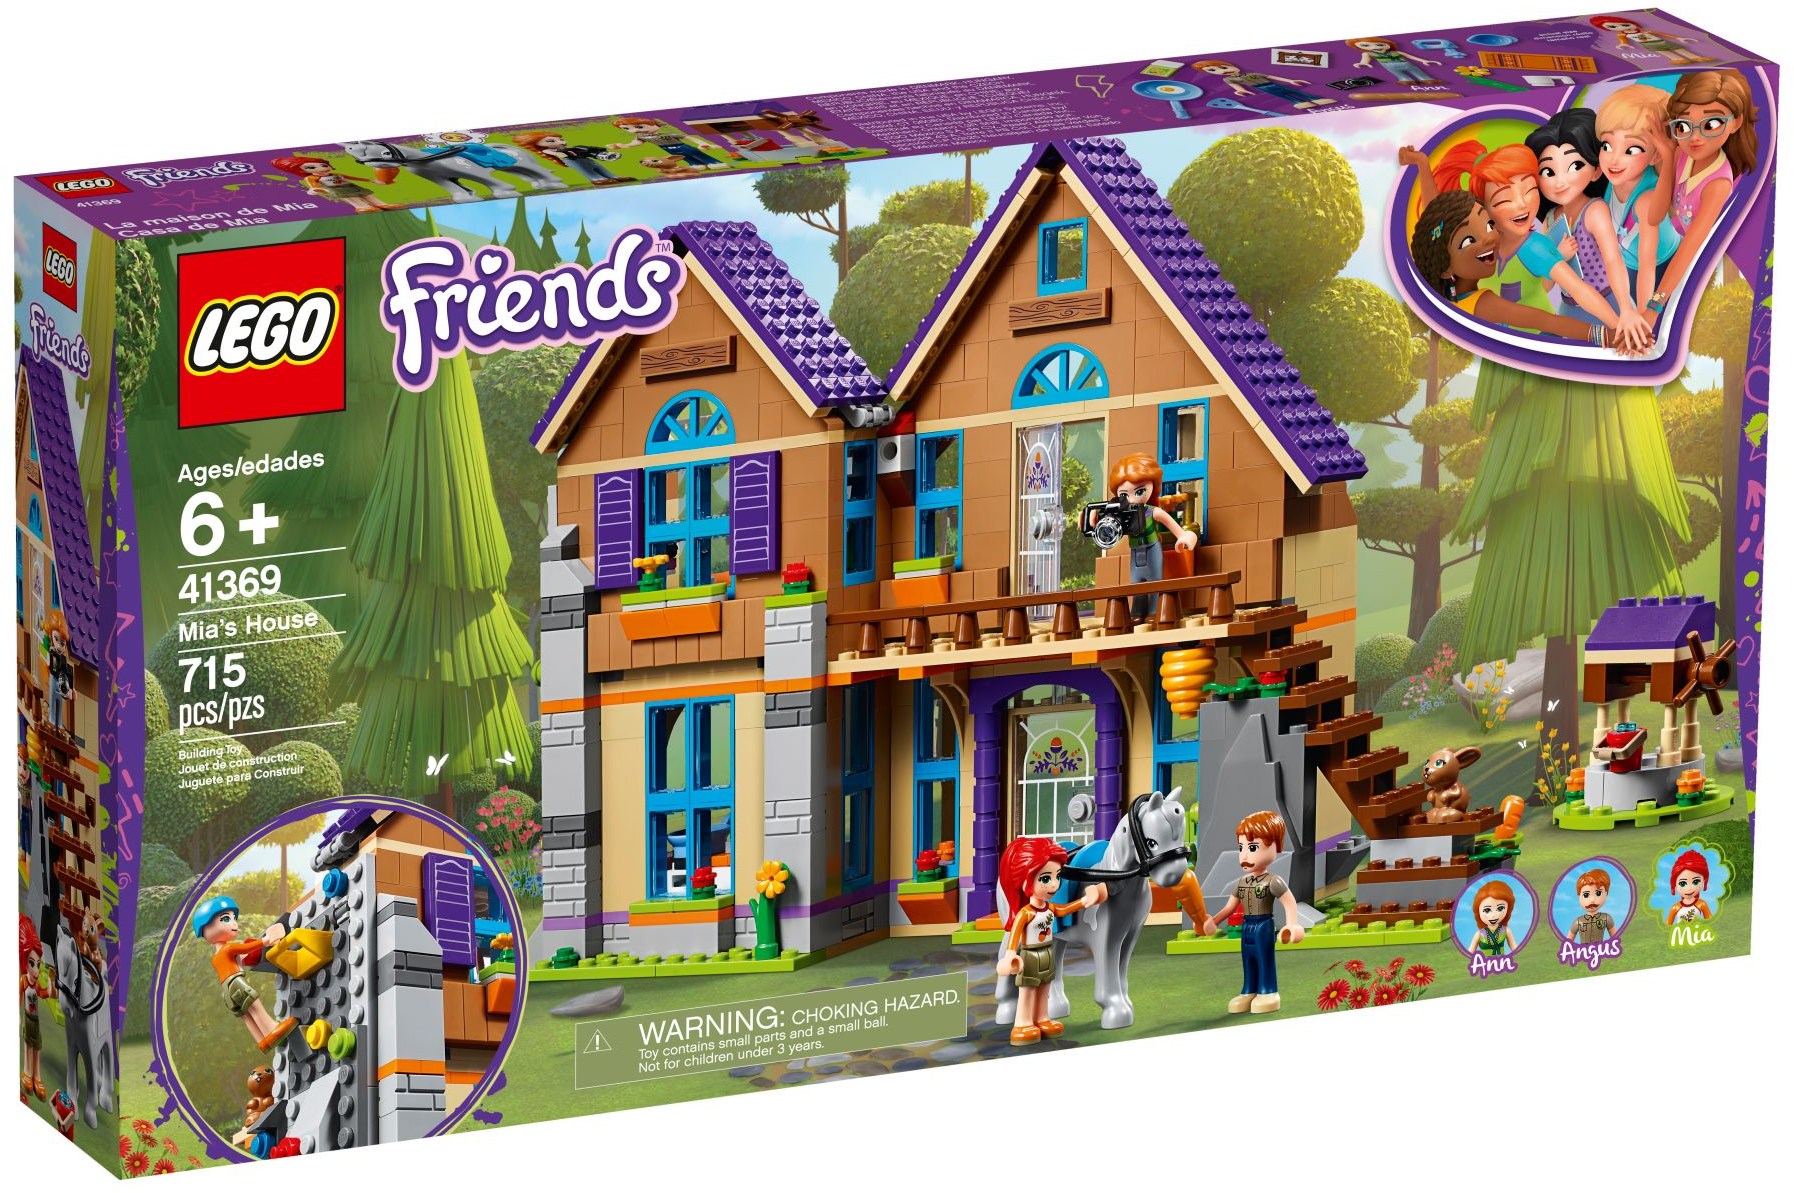 LEGO Friends Mia's Tree House Building Set - wide 8